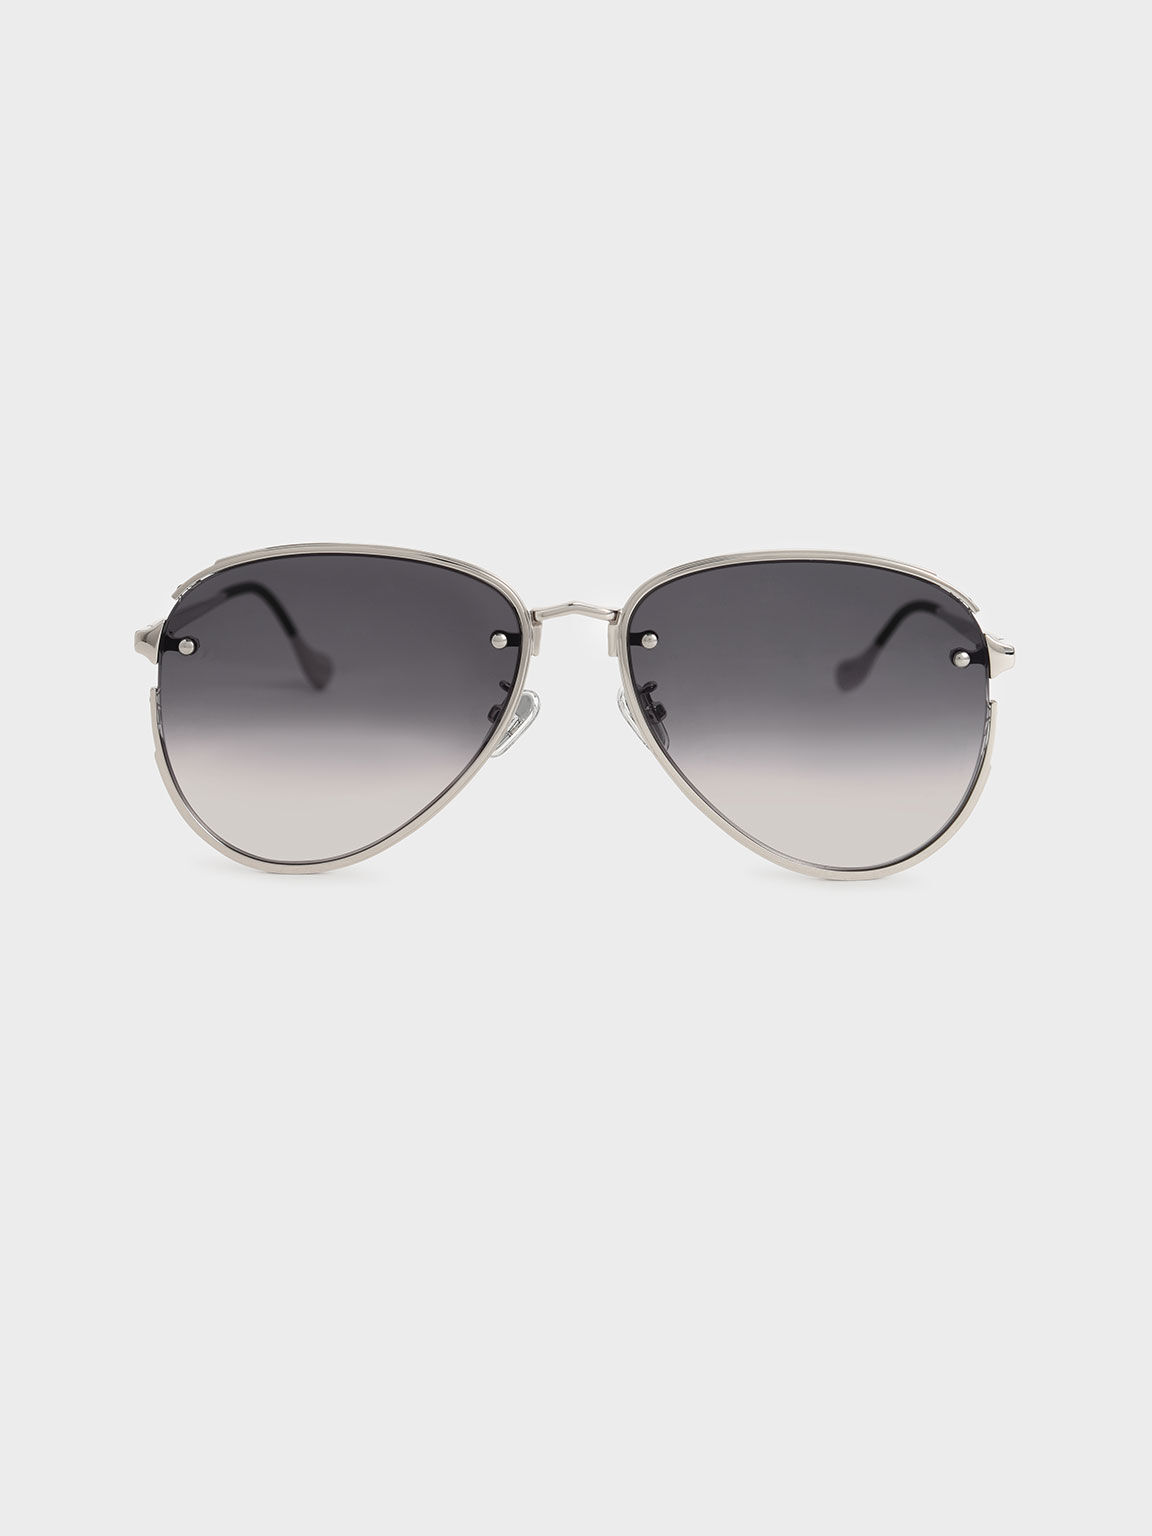 Tinted Aviator Sunglasses, Silver, hi-res